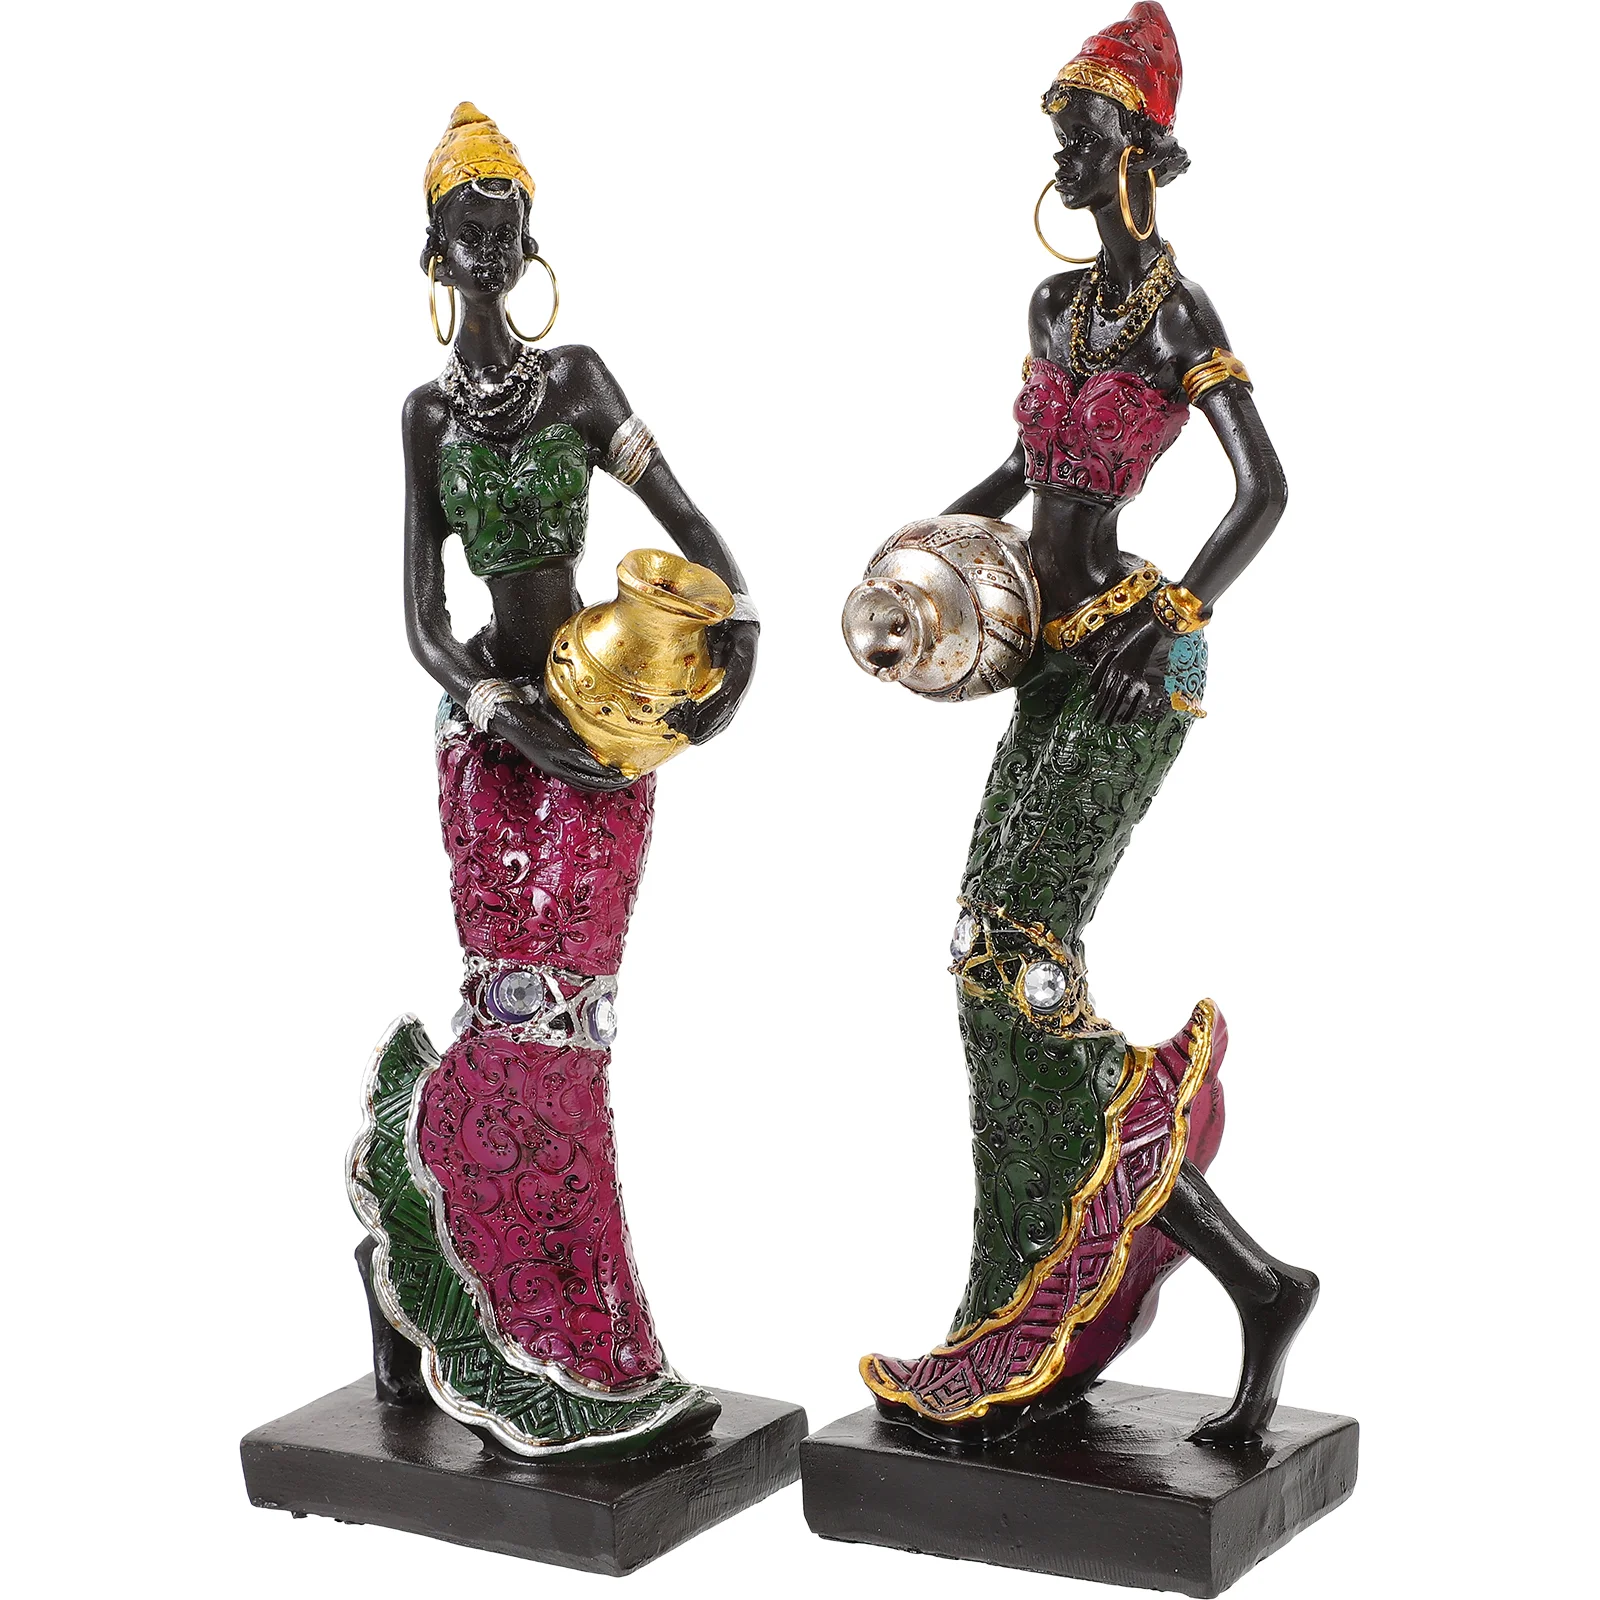 

2 Pcs Shelf Decor Figurines African Lady Statue Resin Tribal Artwork Artistic Women Figure Home Ornament Office